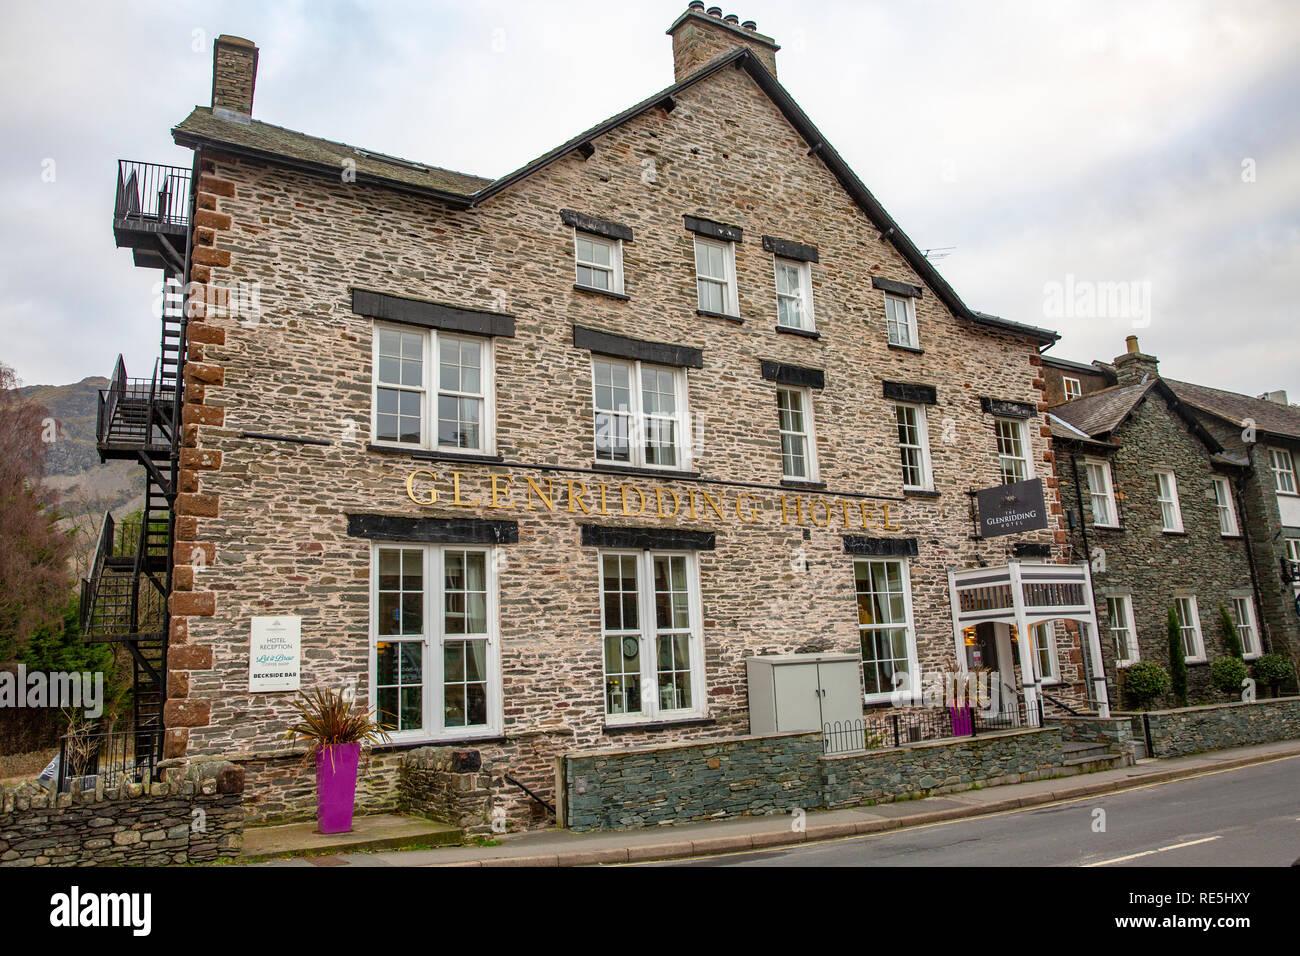 Glenridding hotel and village centre,Glenridding village,Lake District,Cumbria,England Stock Photo